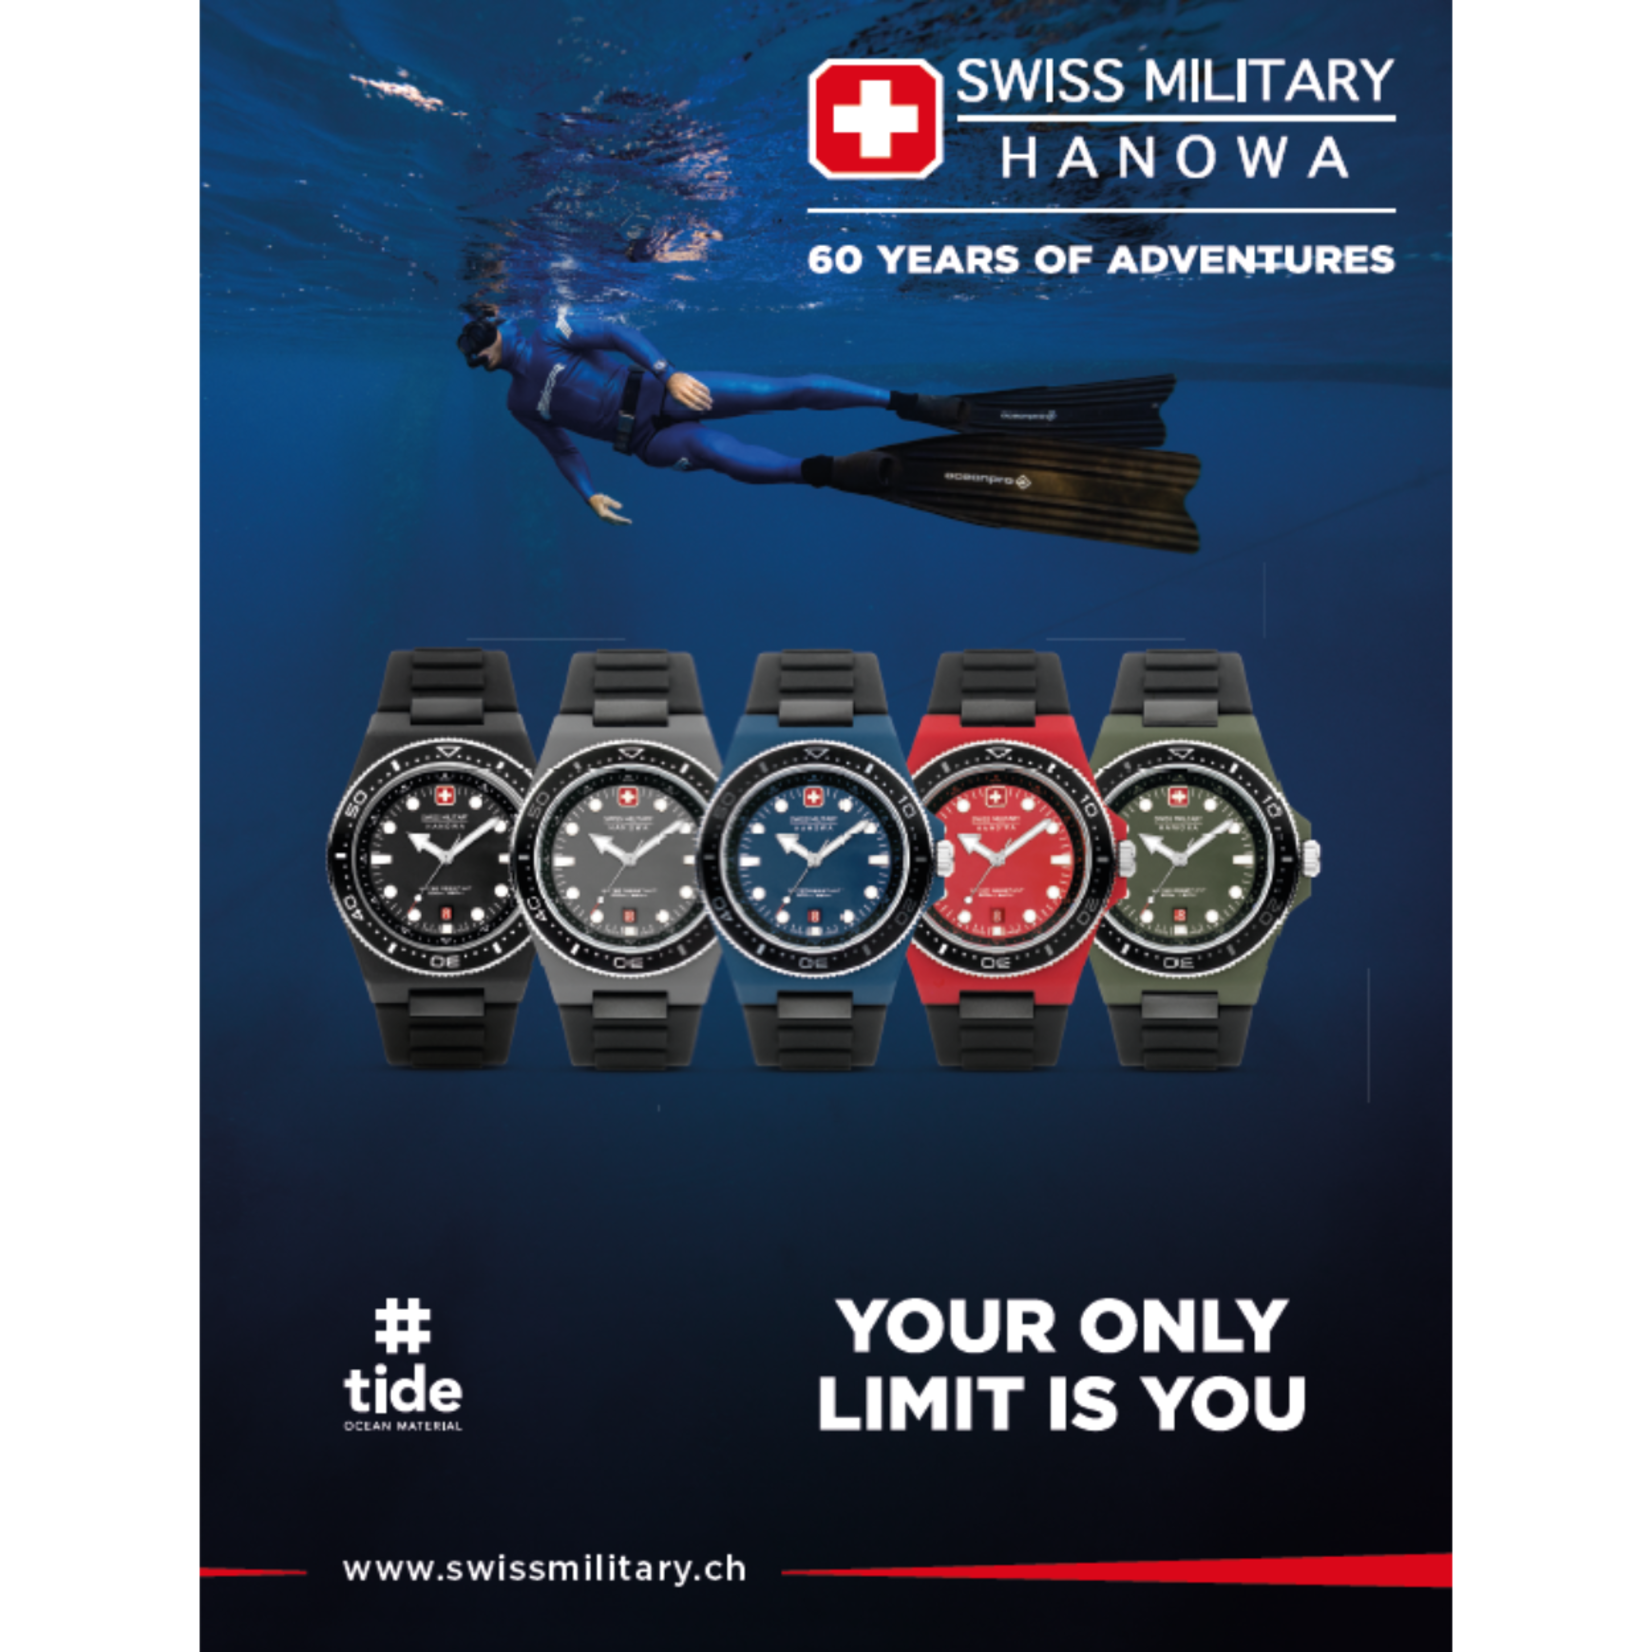 Swiss Military Hanowa Swiss Military Hanowa aqua smwgn0001181 ocean pioneer horloge